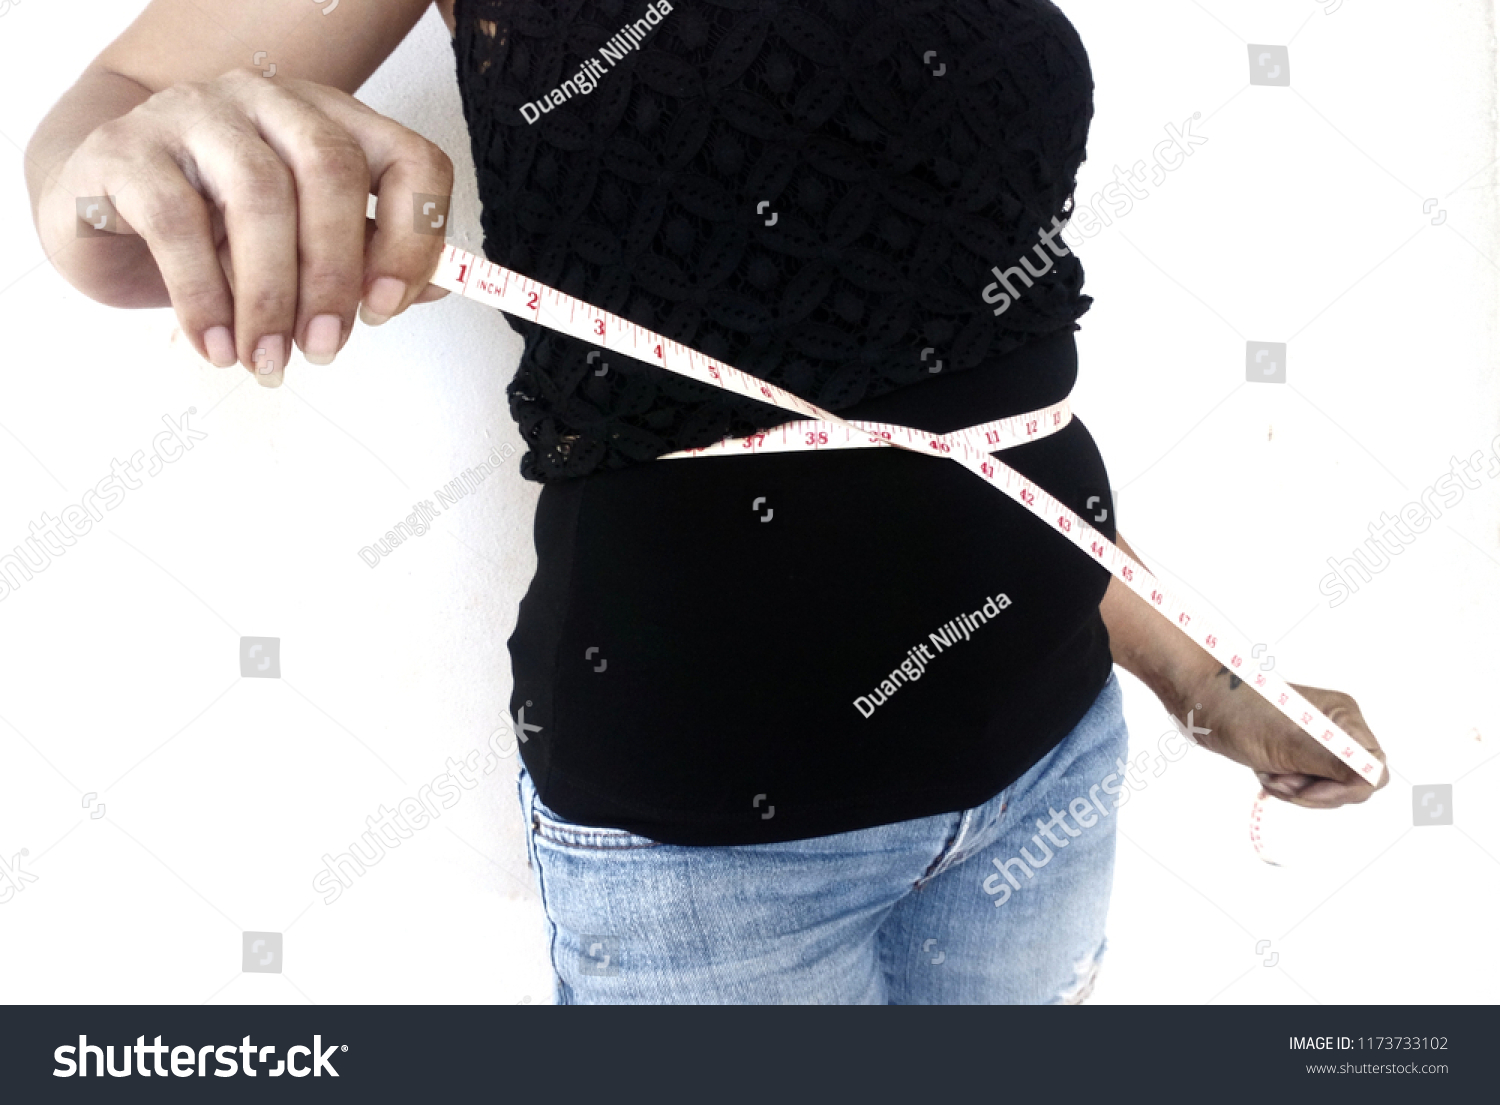 Women wearing black shirts, wearing black jeans Use the measuring device .. Waist measurement. #1173733102